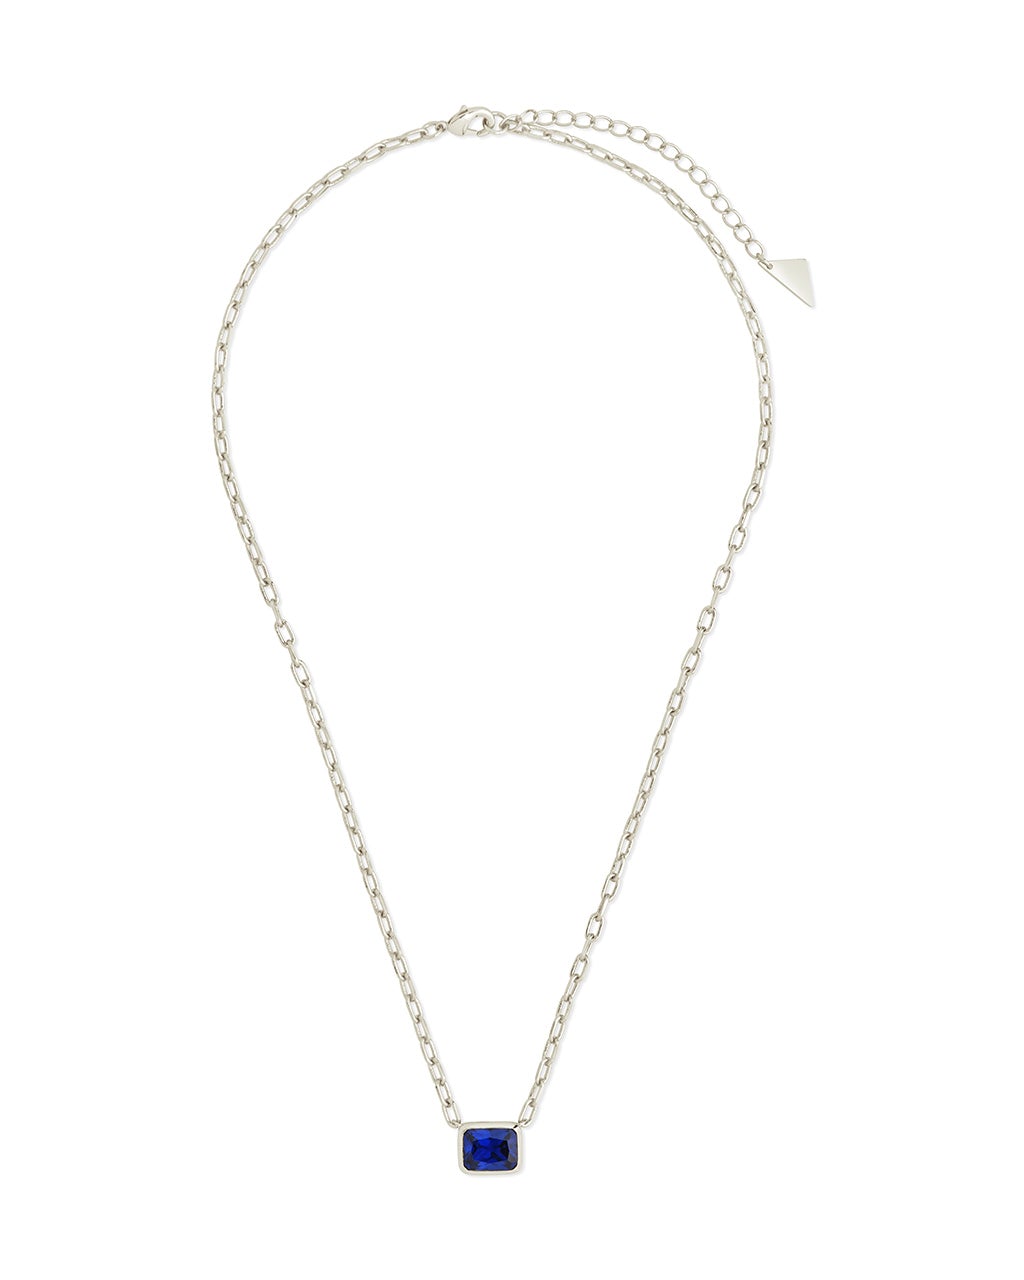 Sapphire Cushion-Cut Bezel Pendant Necklace Necklace Sterling Forever 